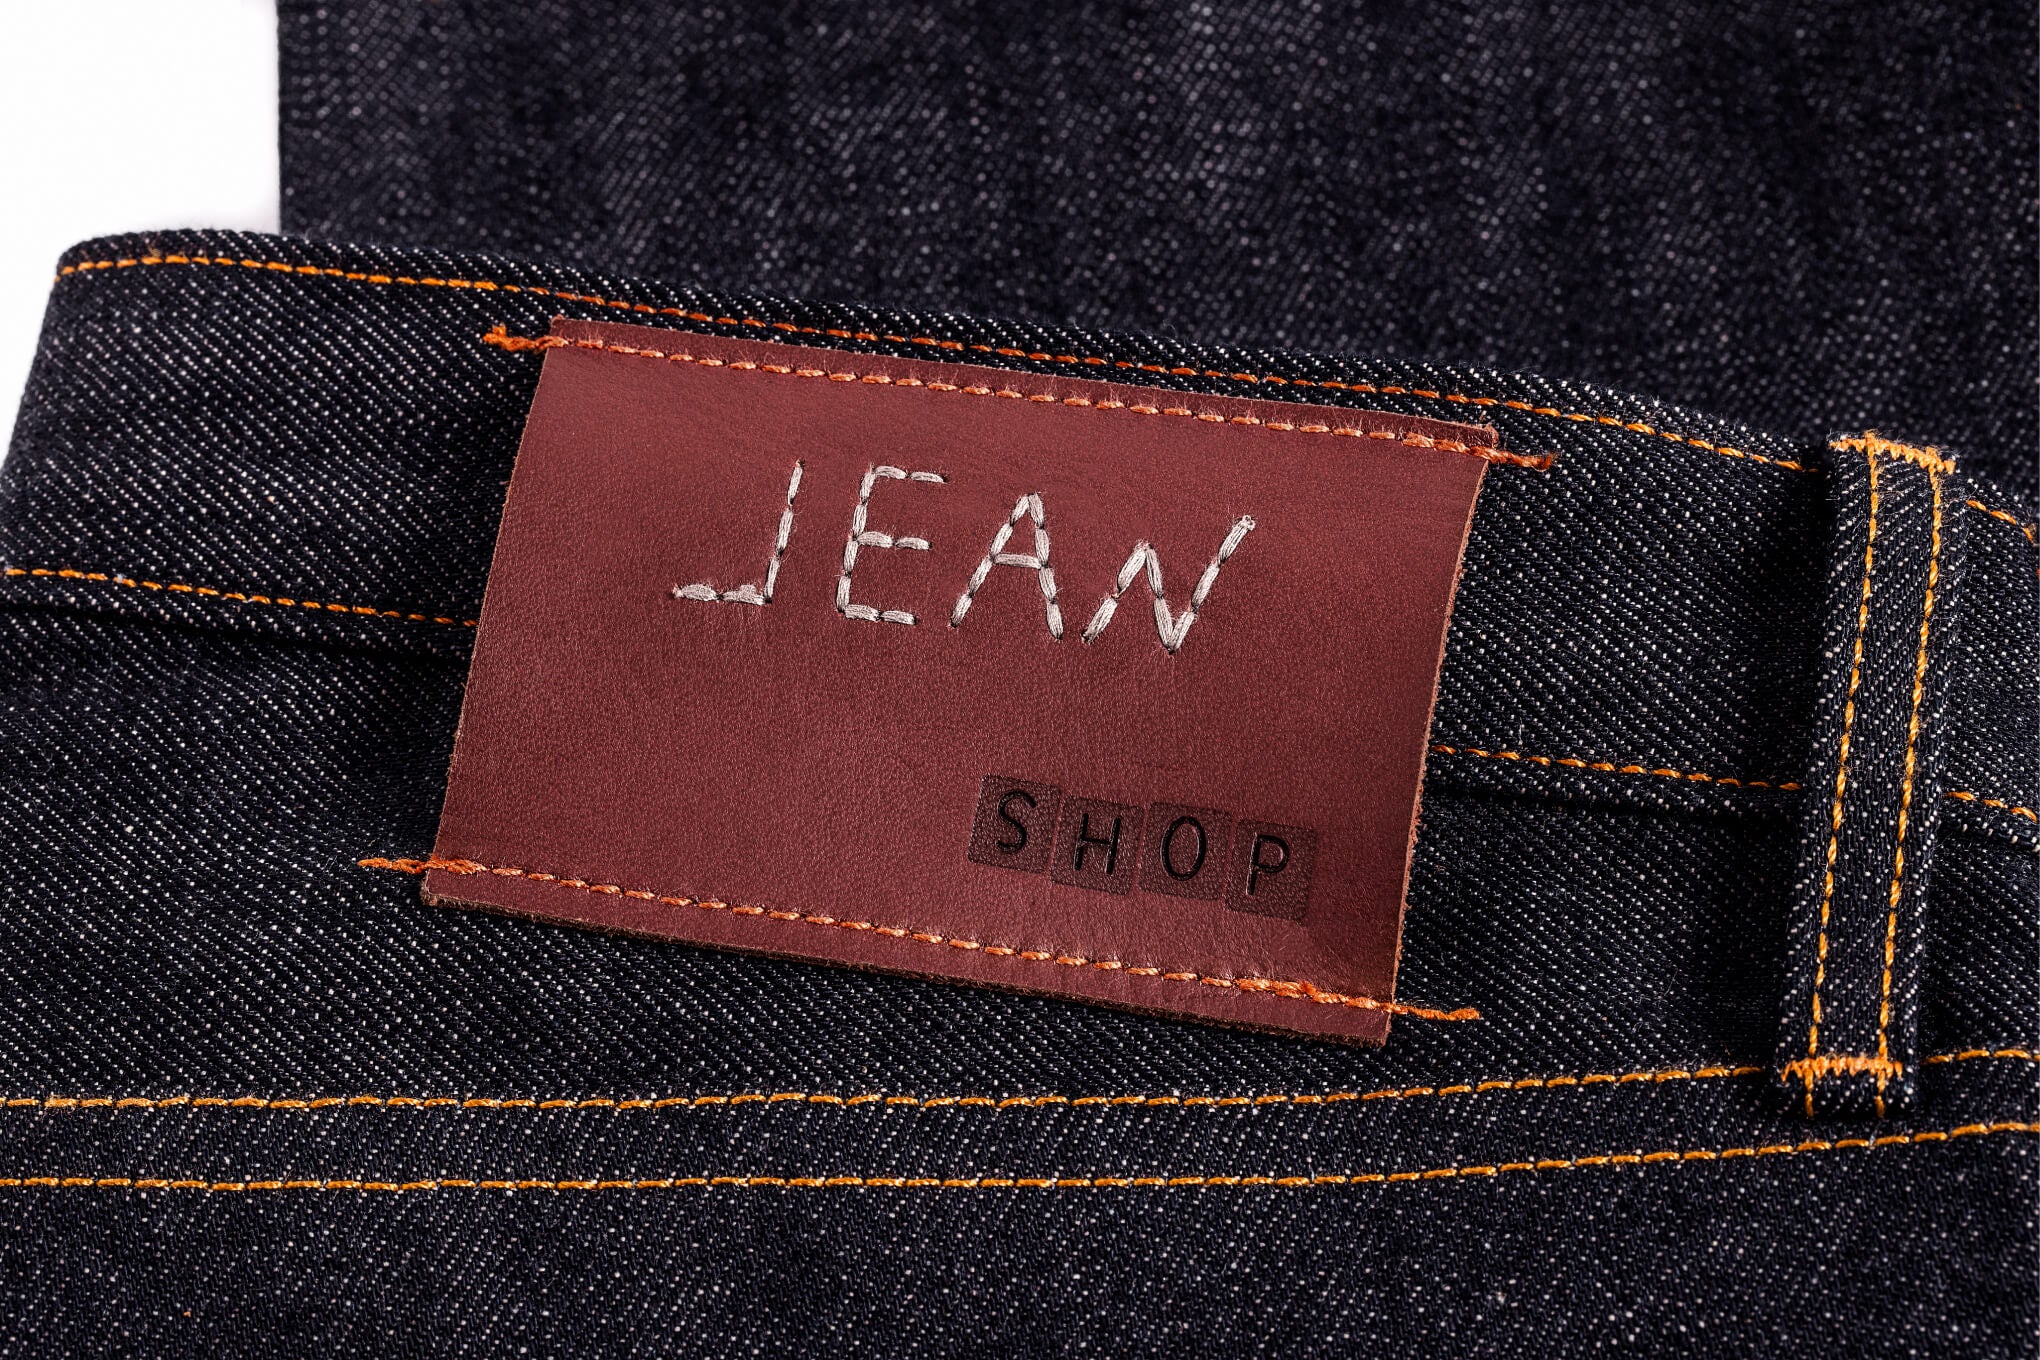 JEAN SHOP® – Jean Shop